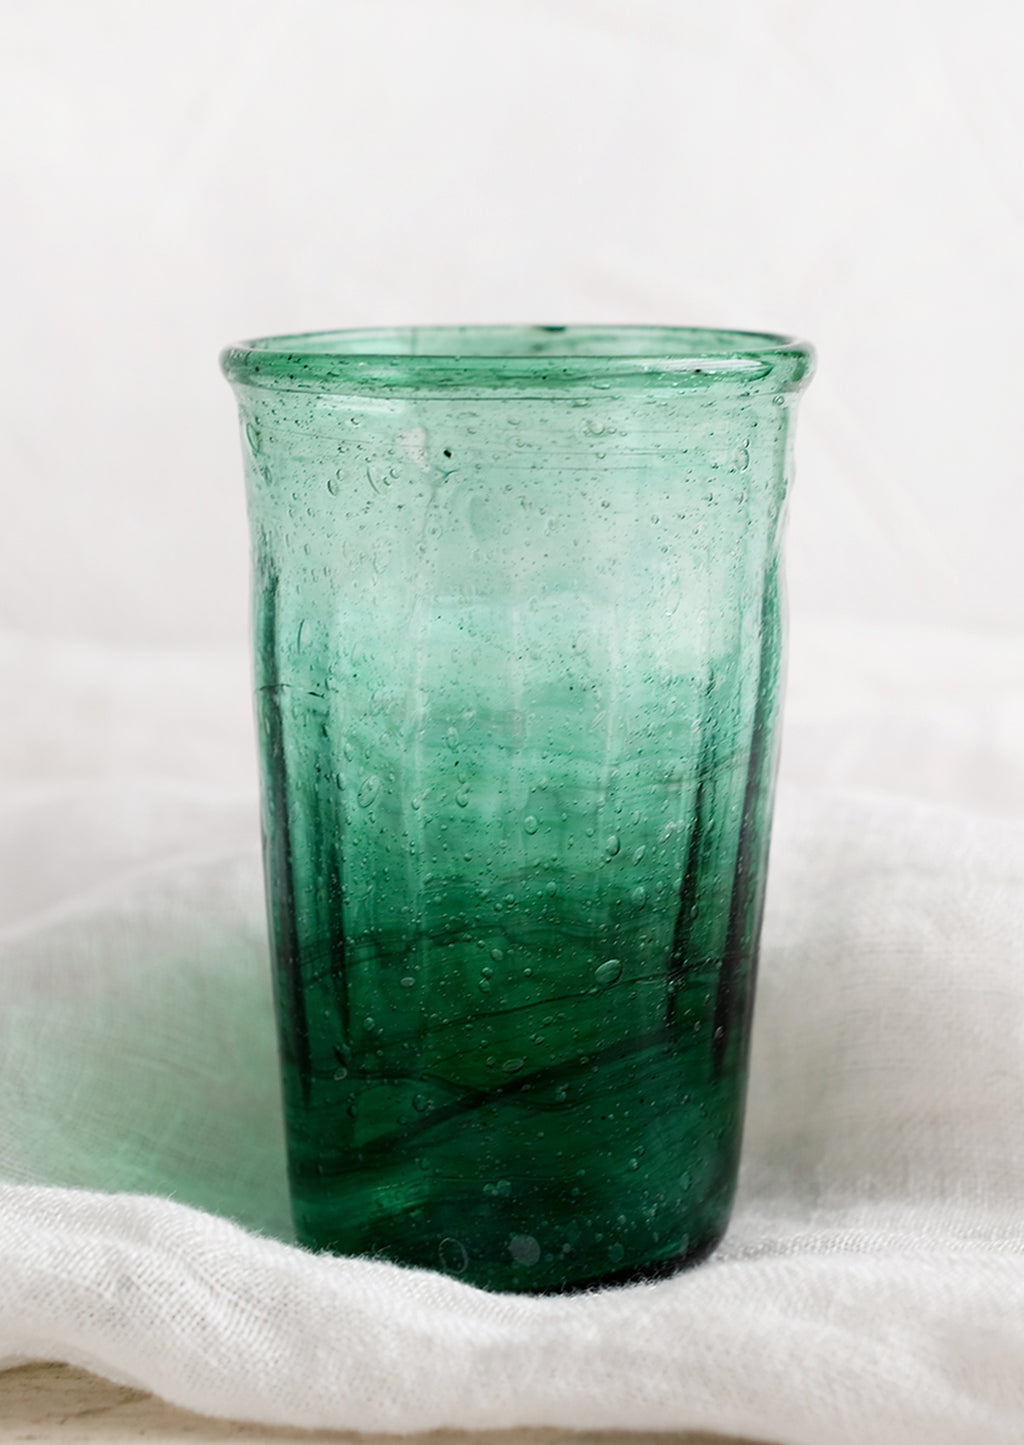 Jade: A glass tumbler in jade color.